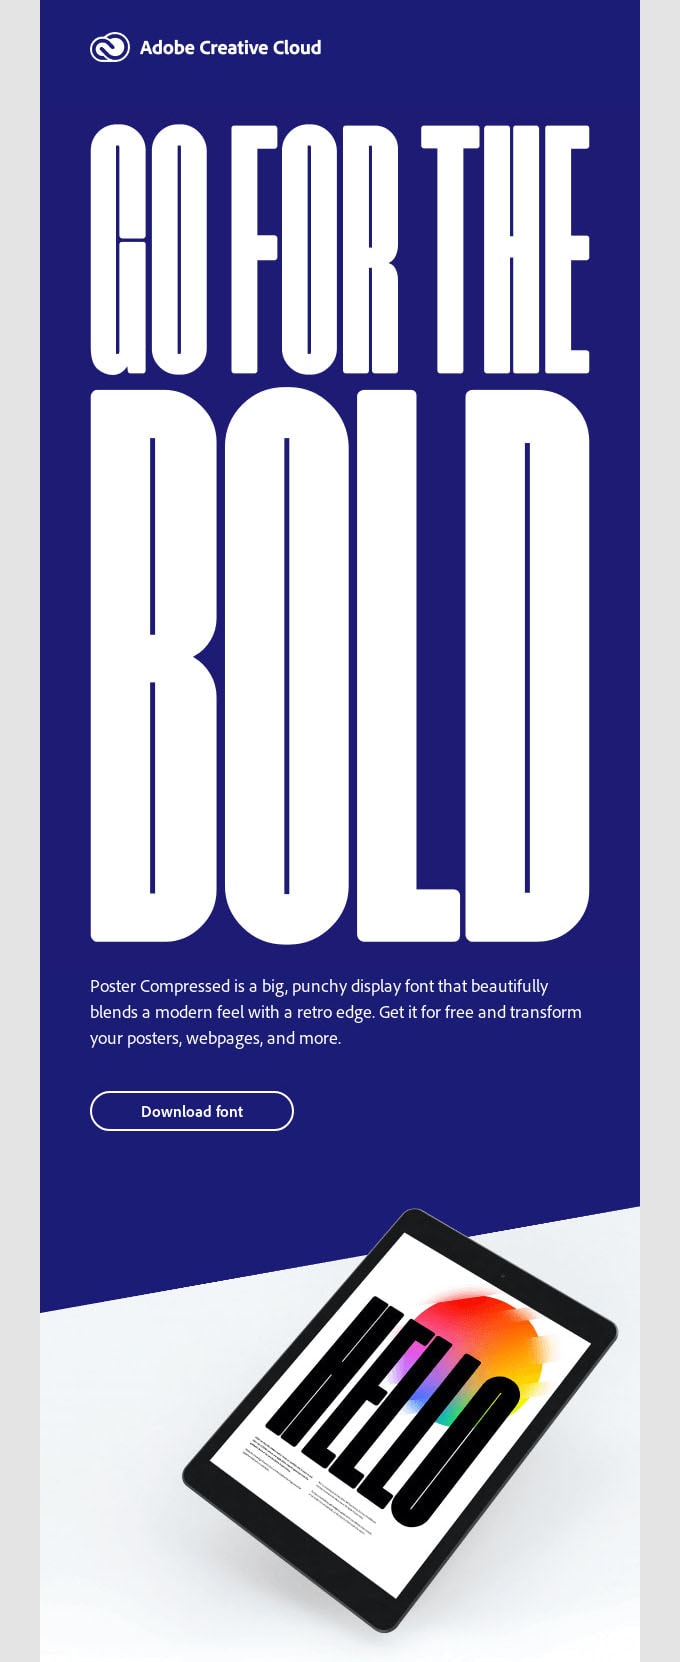 Adobe Email Big Bold Typography